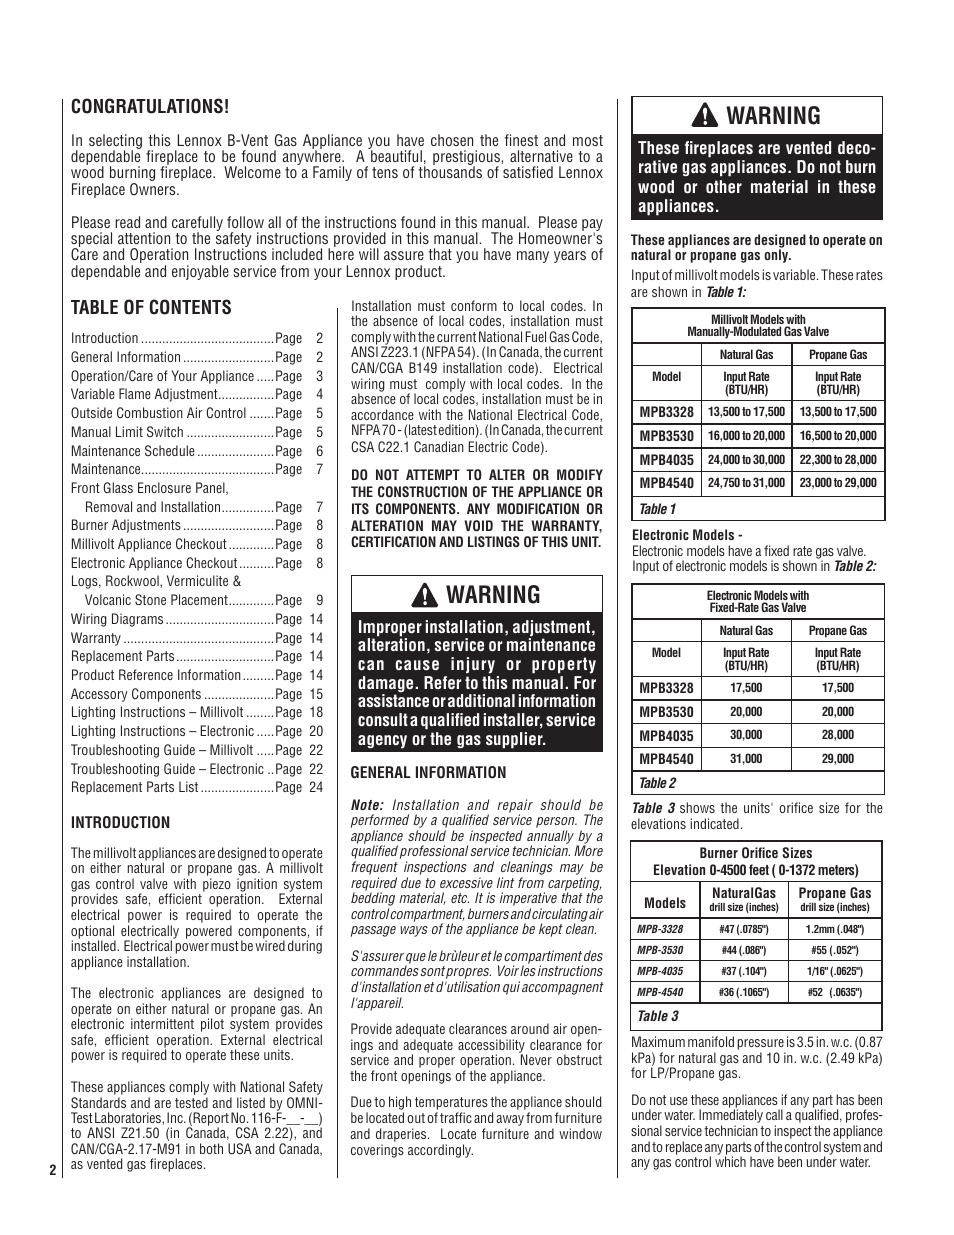 LG LENNOX MPB3328CNE User Manual | Page 2 / 28